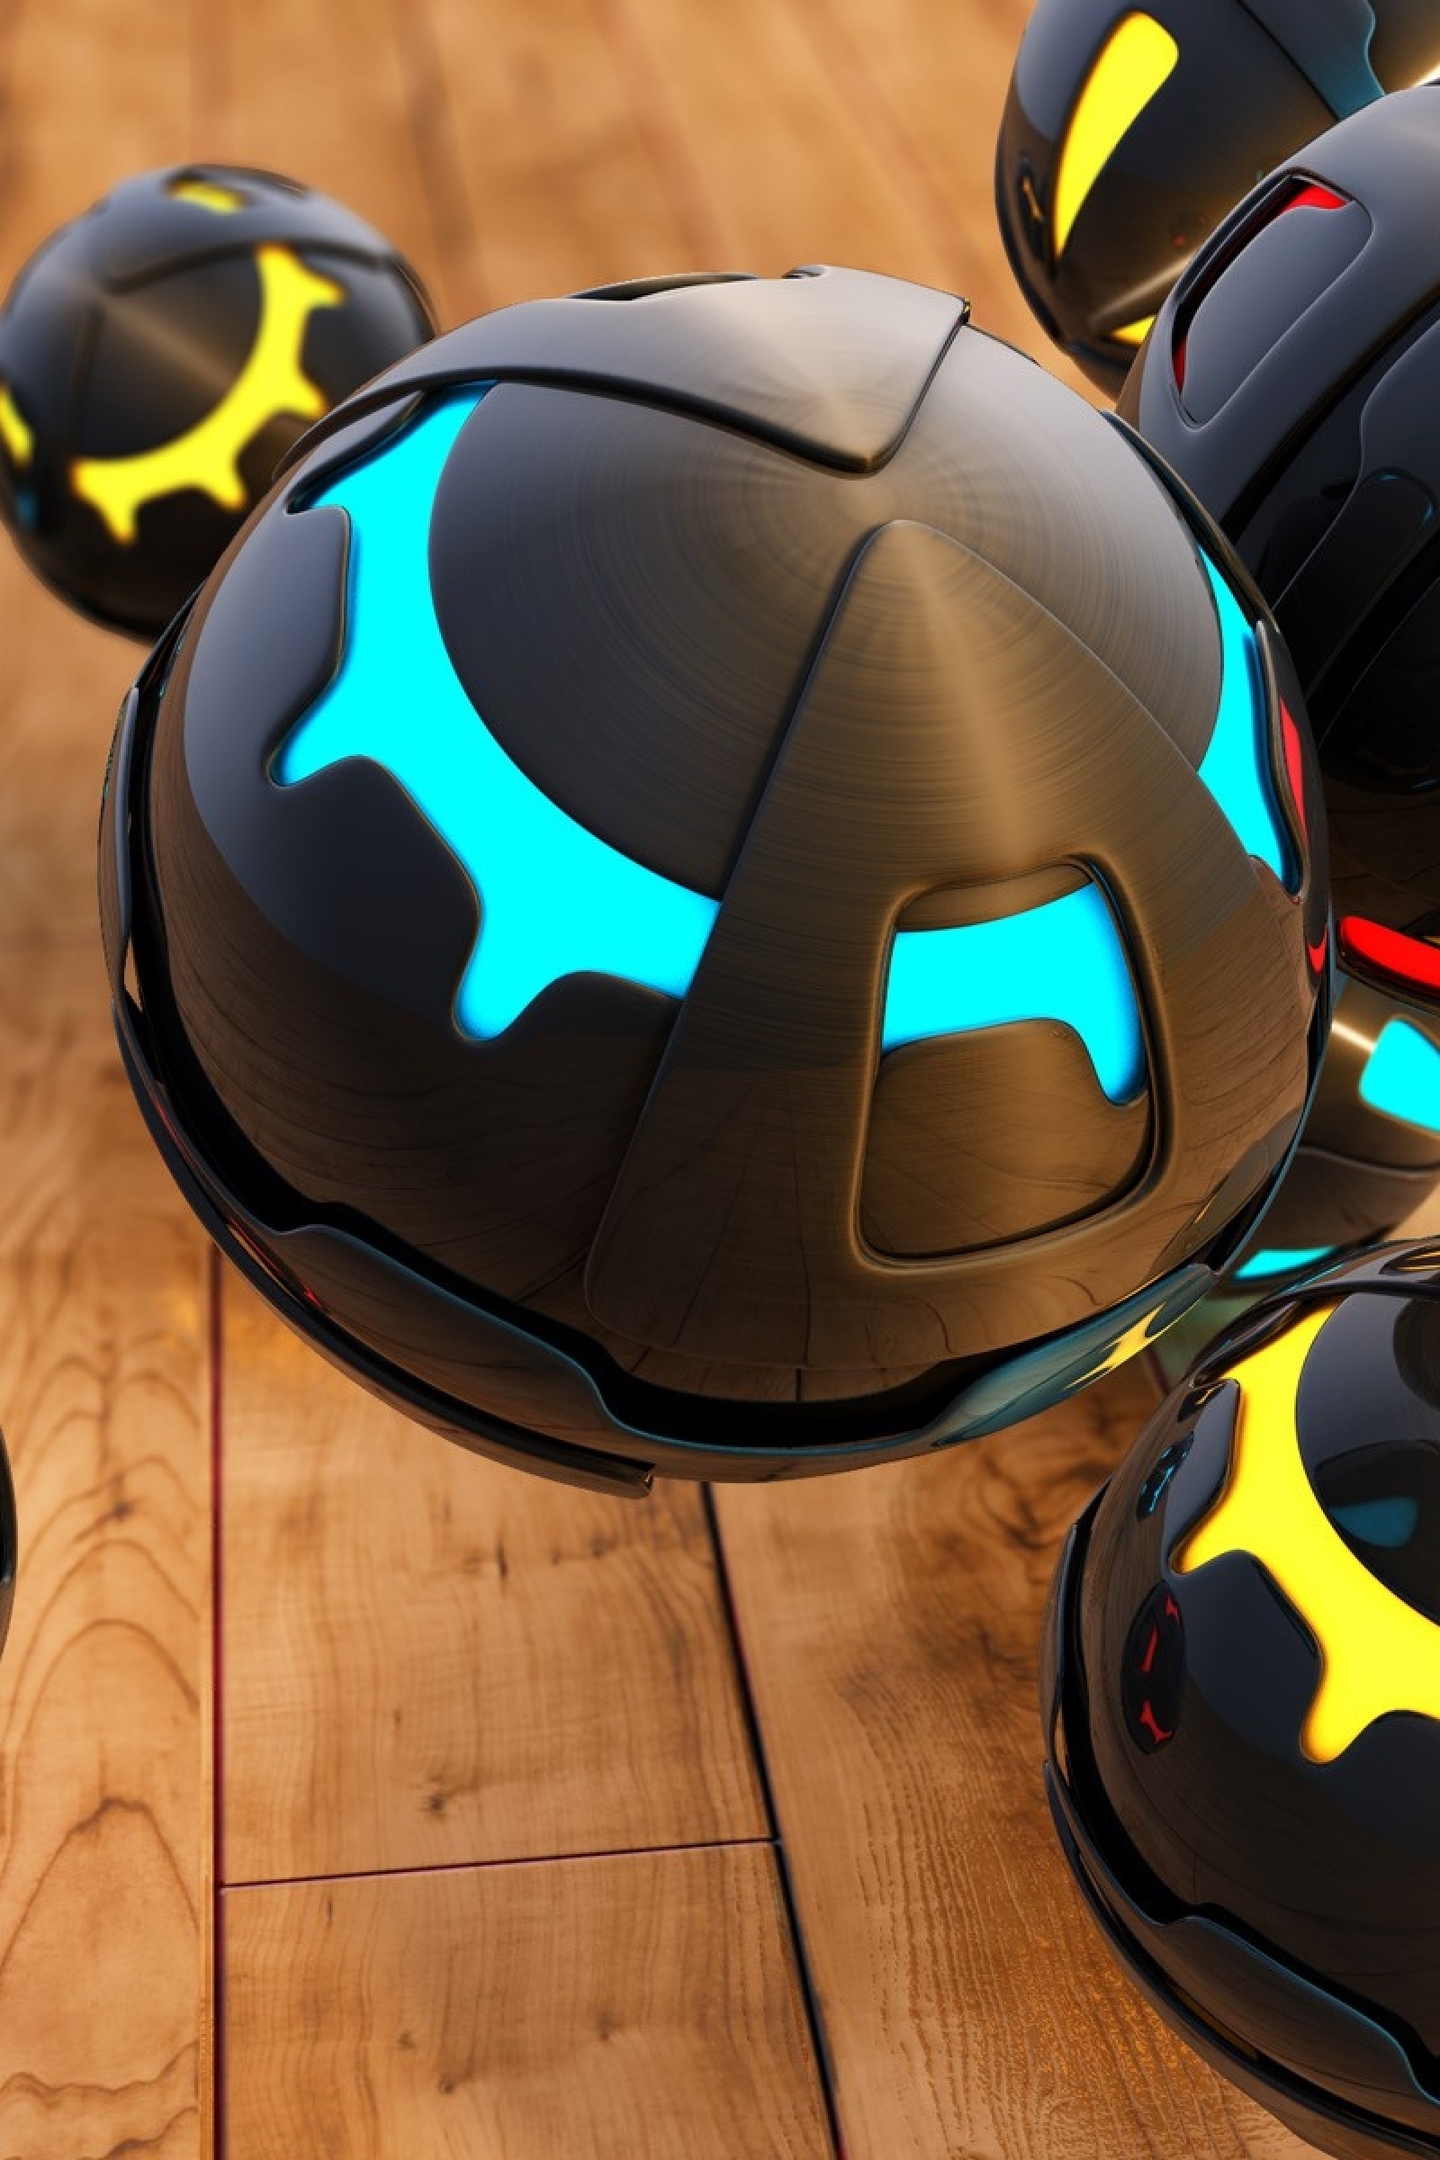 Image: Colored balls, reflection, flight, floor, boards